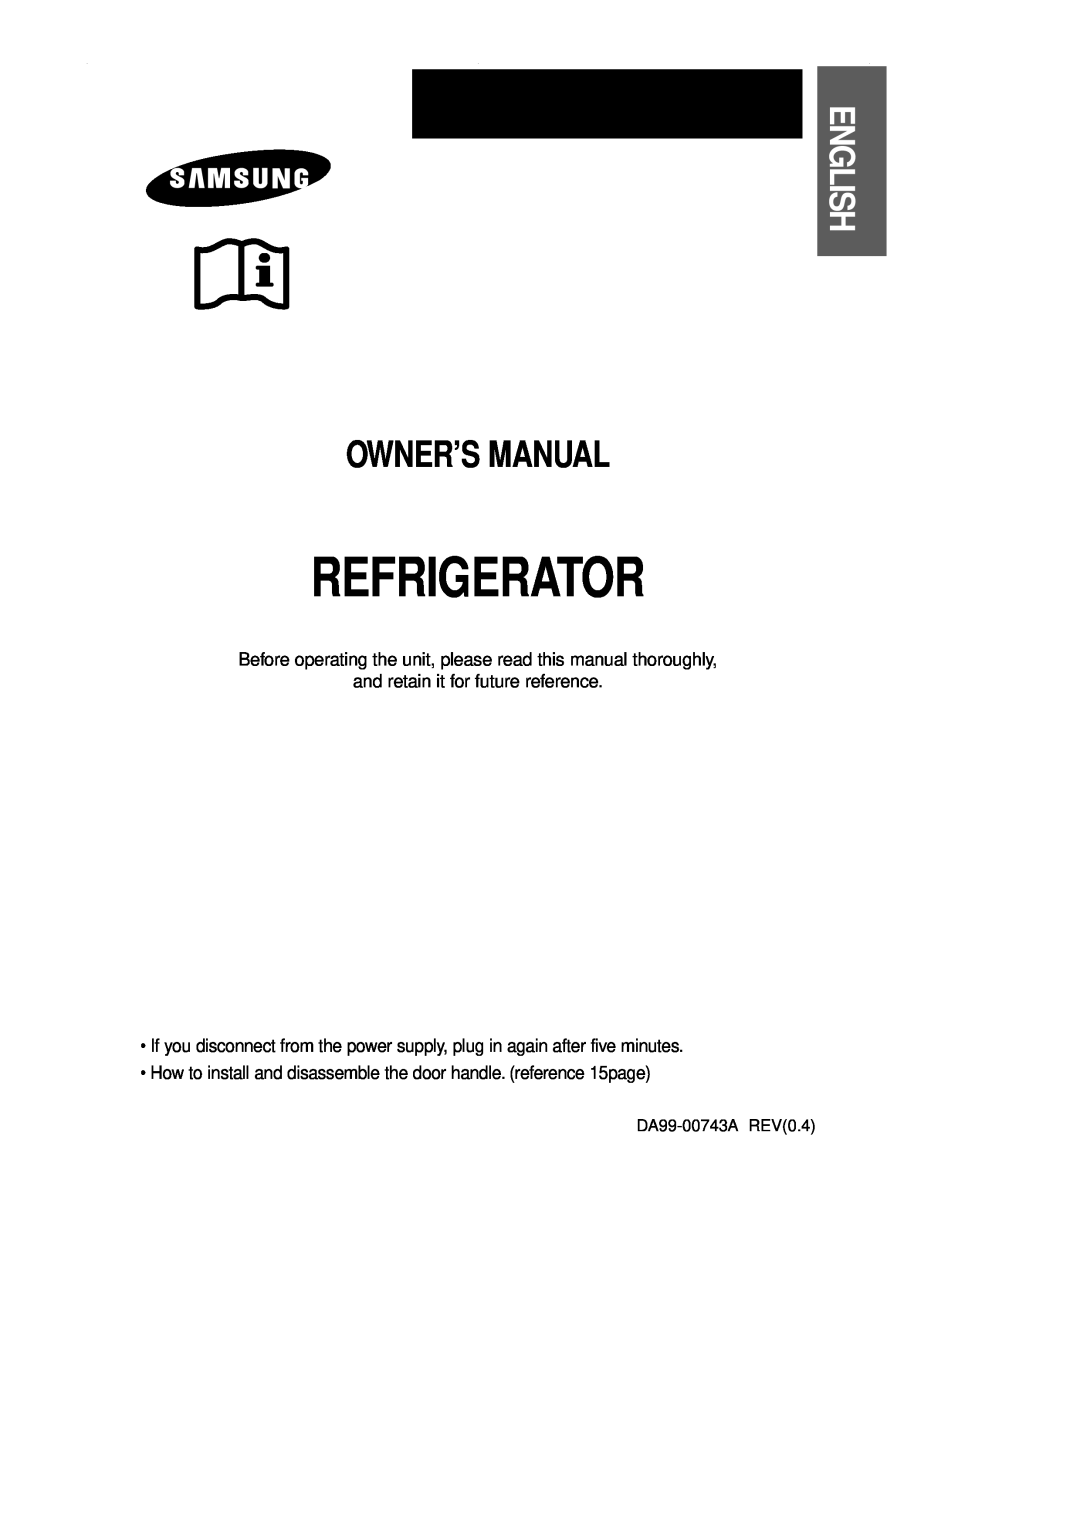 Samsung DA99-00743A owner manual English, Refrigerator 